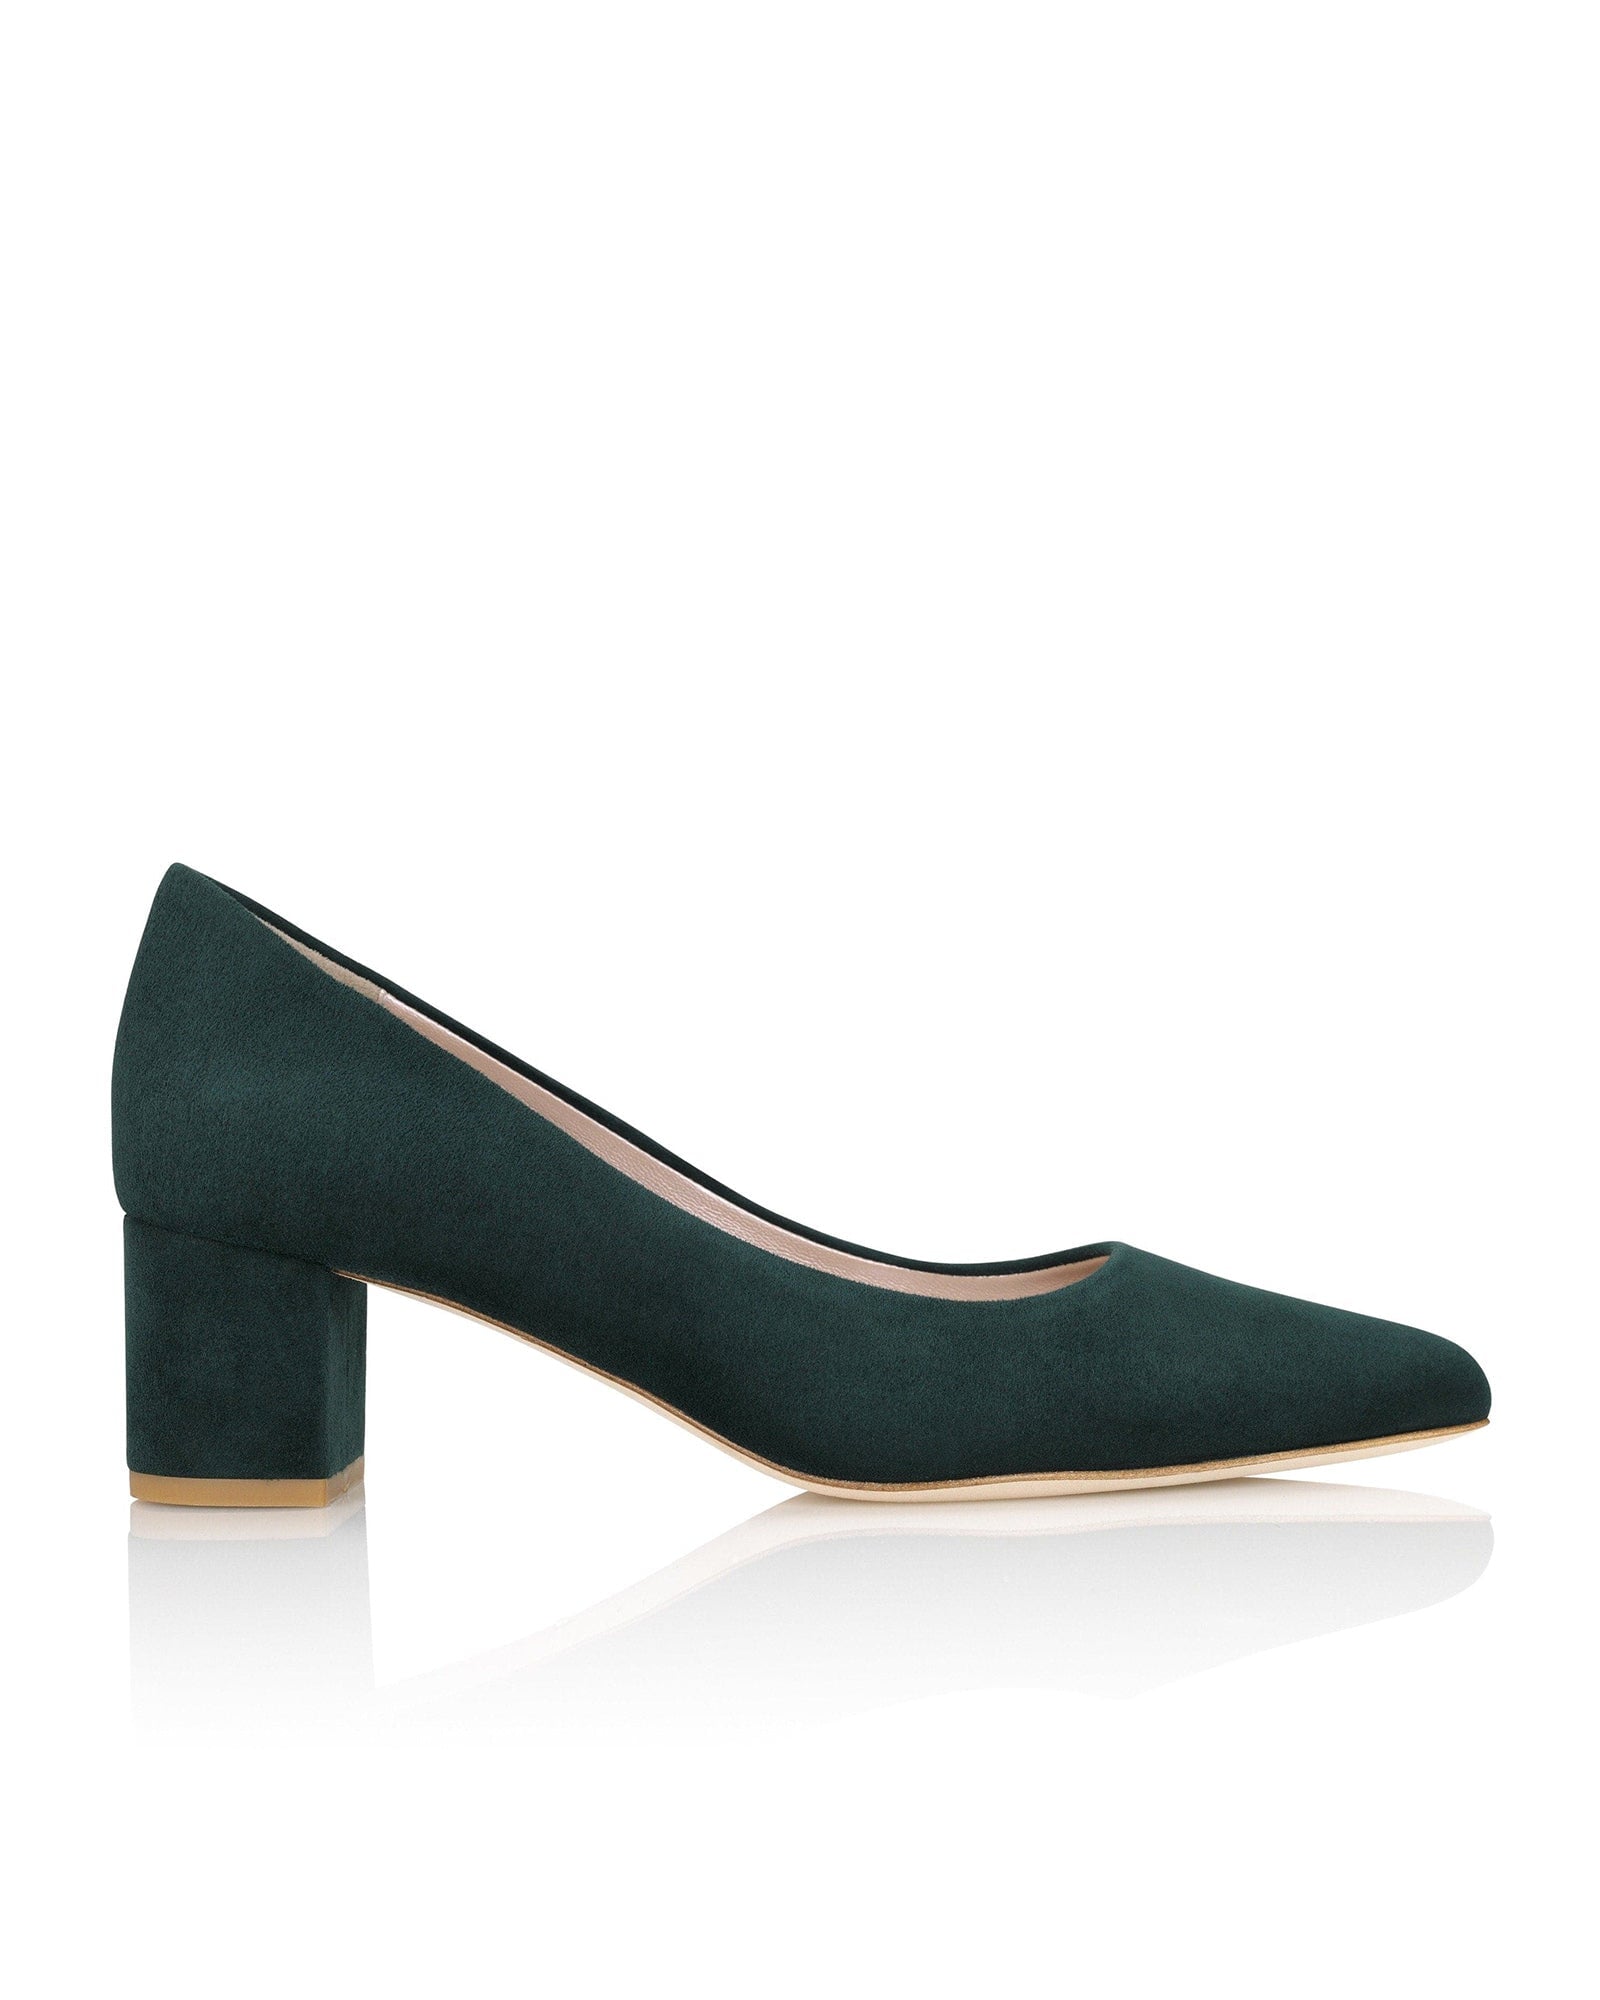 Josie Kitten Greenery Fashion Shoe Green Block Heel Court Shoe  image